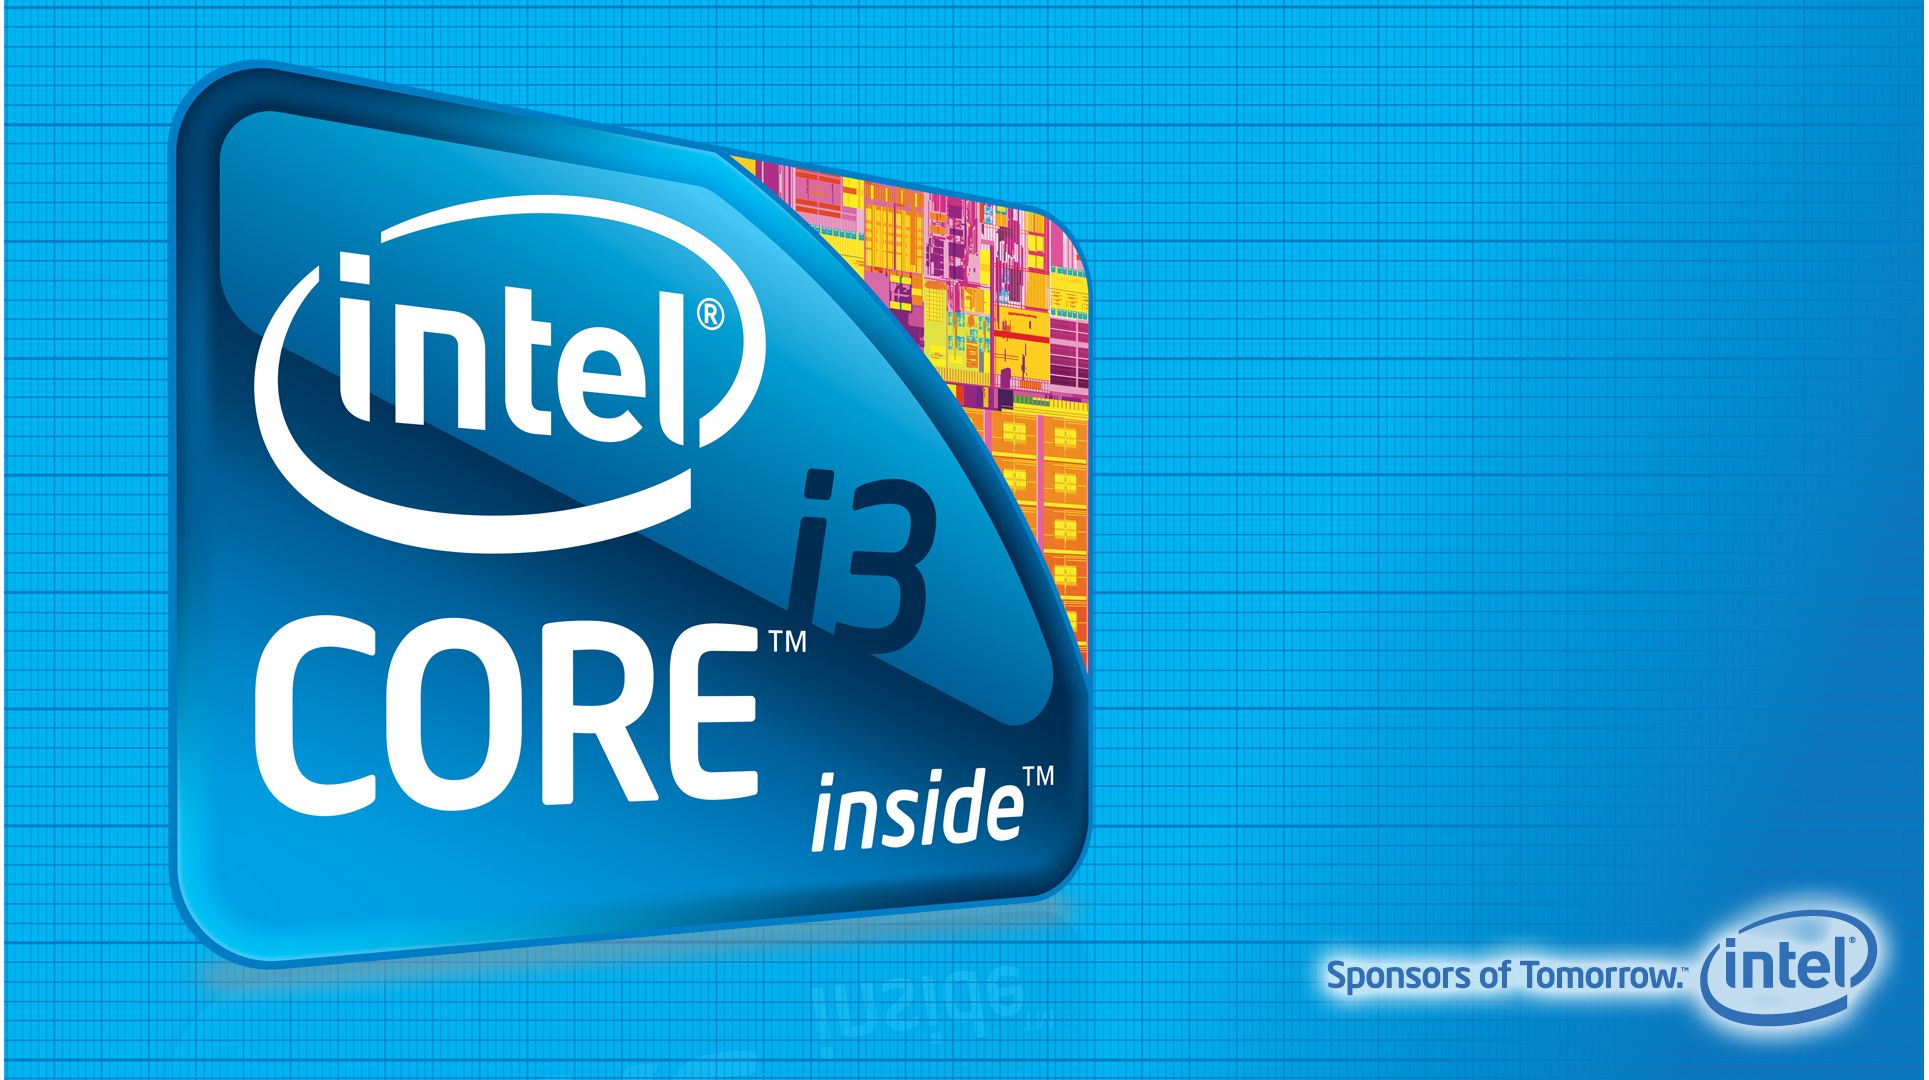 Интел core i3. Intel Core i3 logo. Intel Core i7 1920 1080. Intel Core i5 logo. Интел i3 1920 1080.